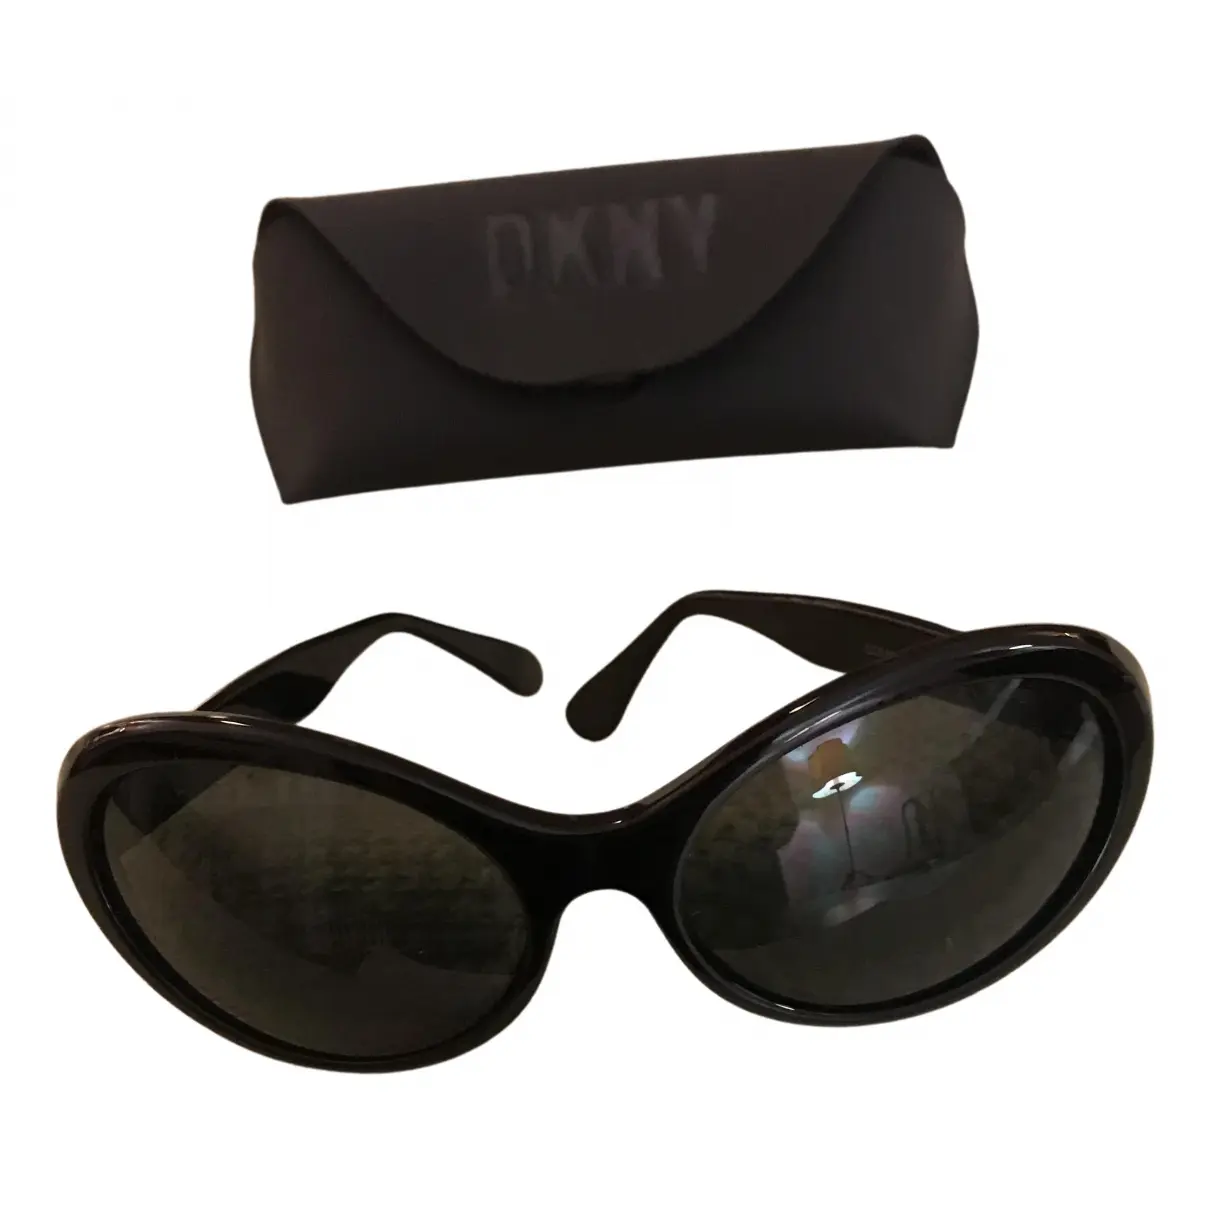 Oversized sunglasses Dkny - Vintage